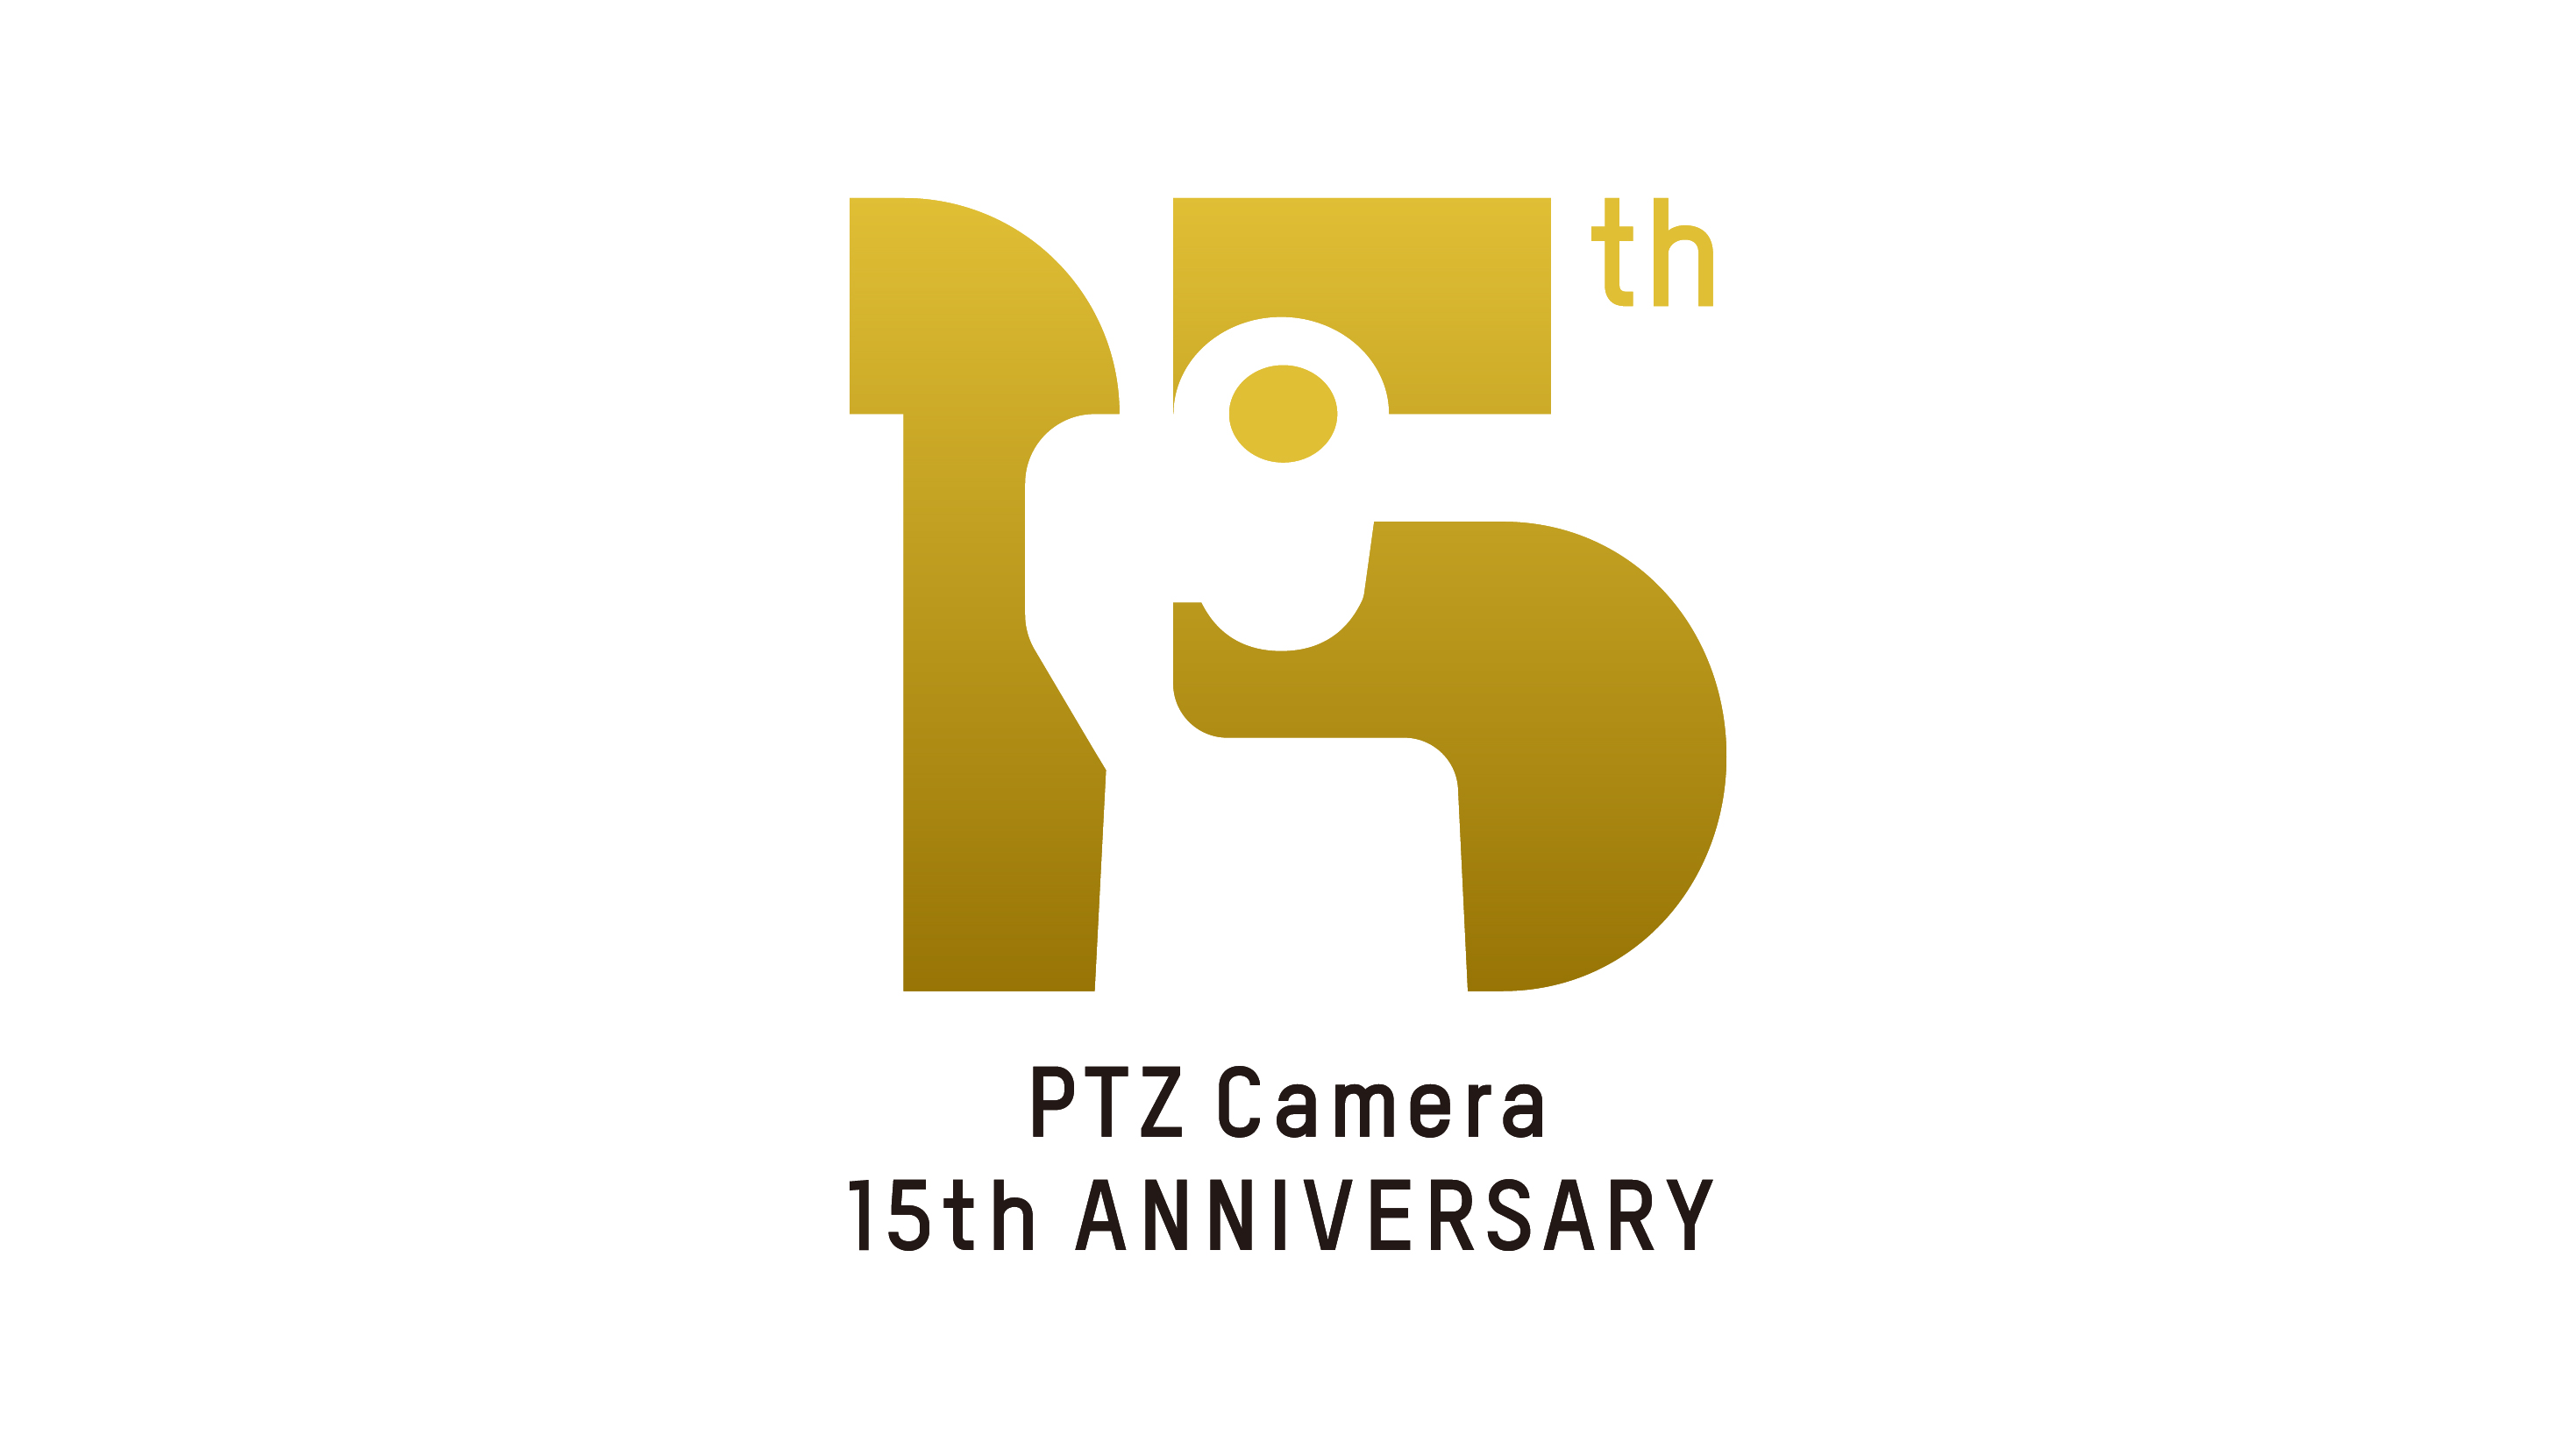 PTZ camera 15th anniversary logo